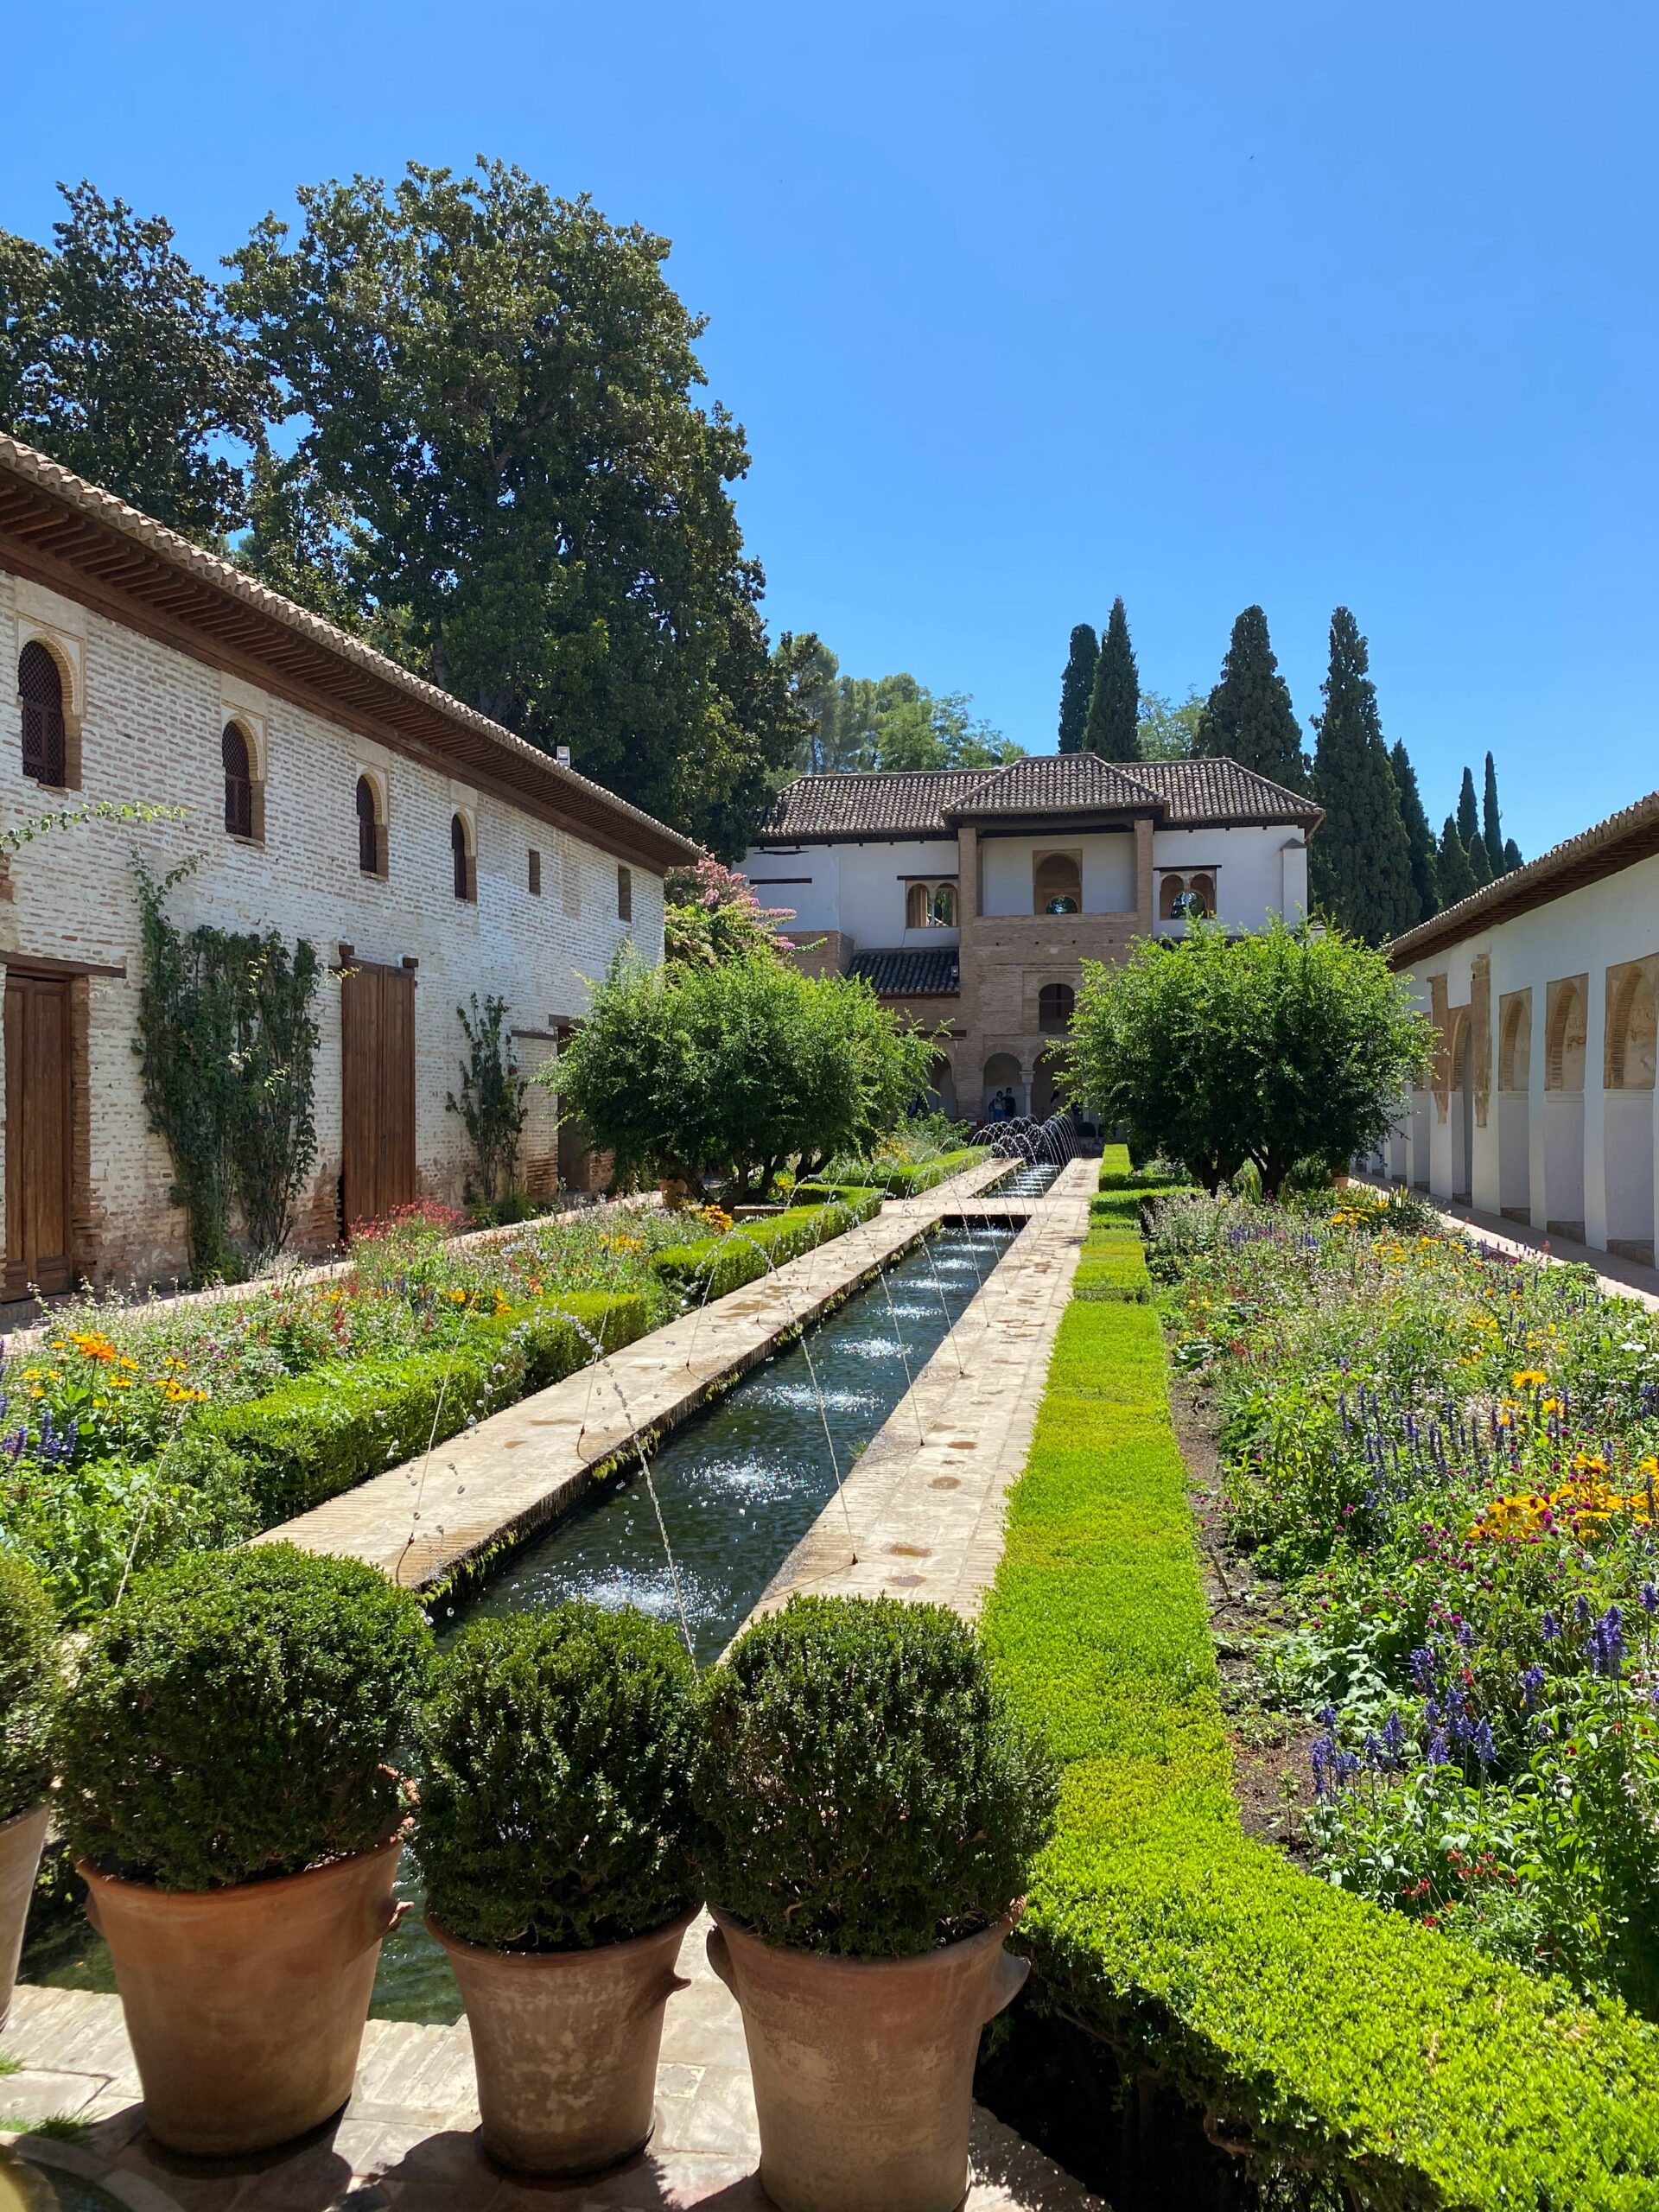 The beautiful Generalife Gradens in La Alhambra